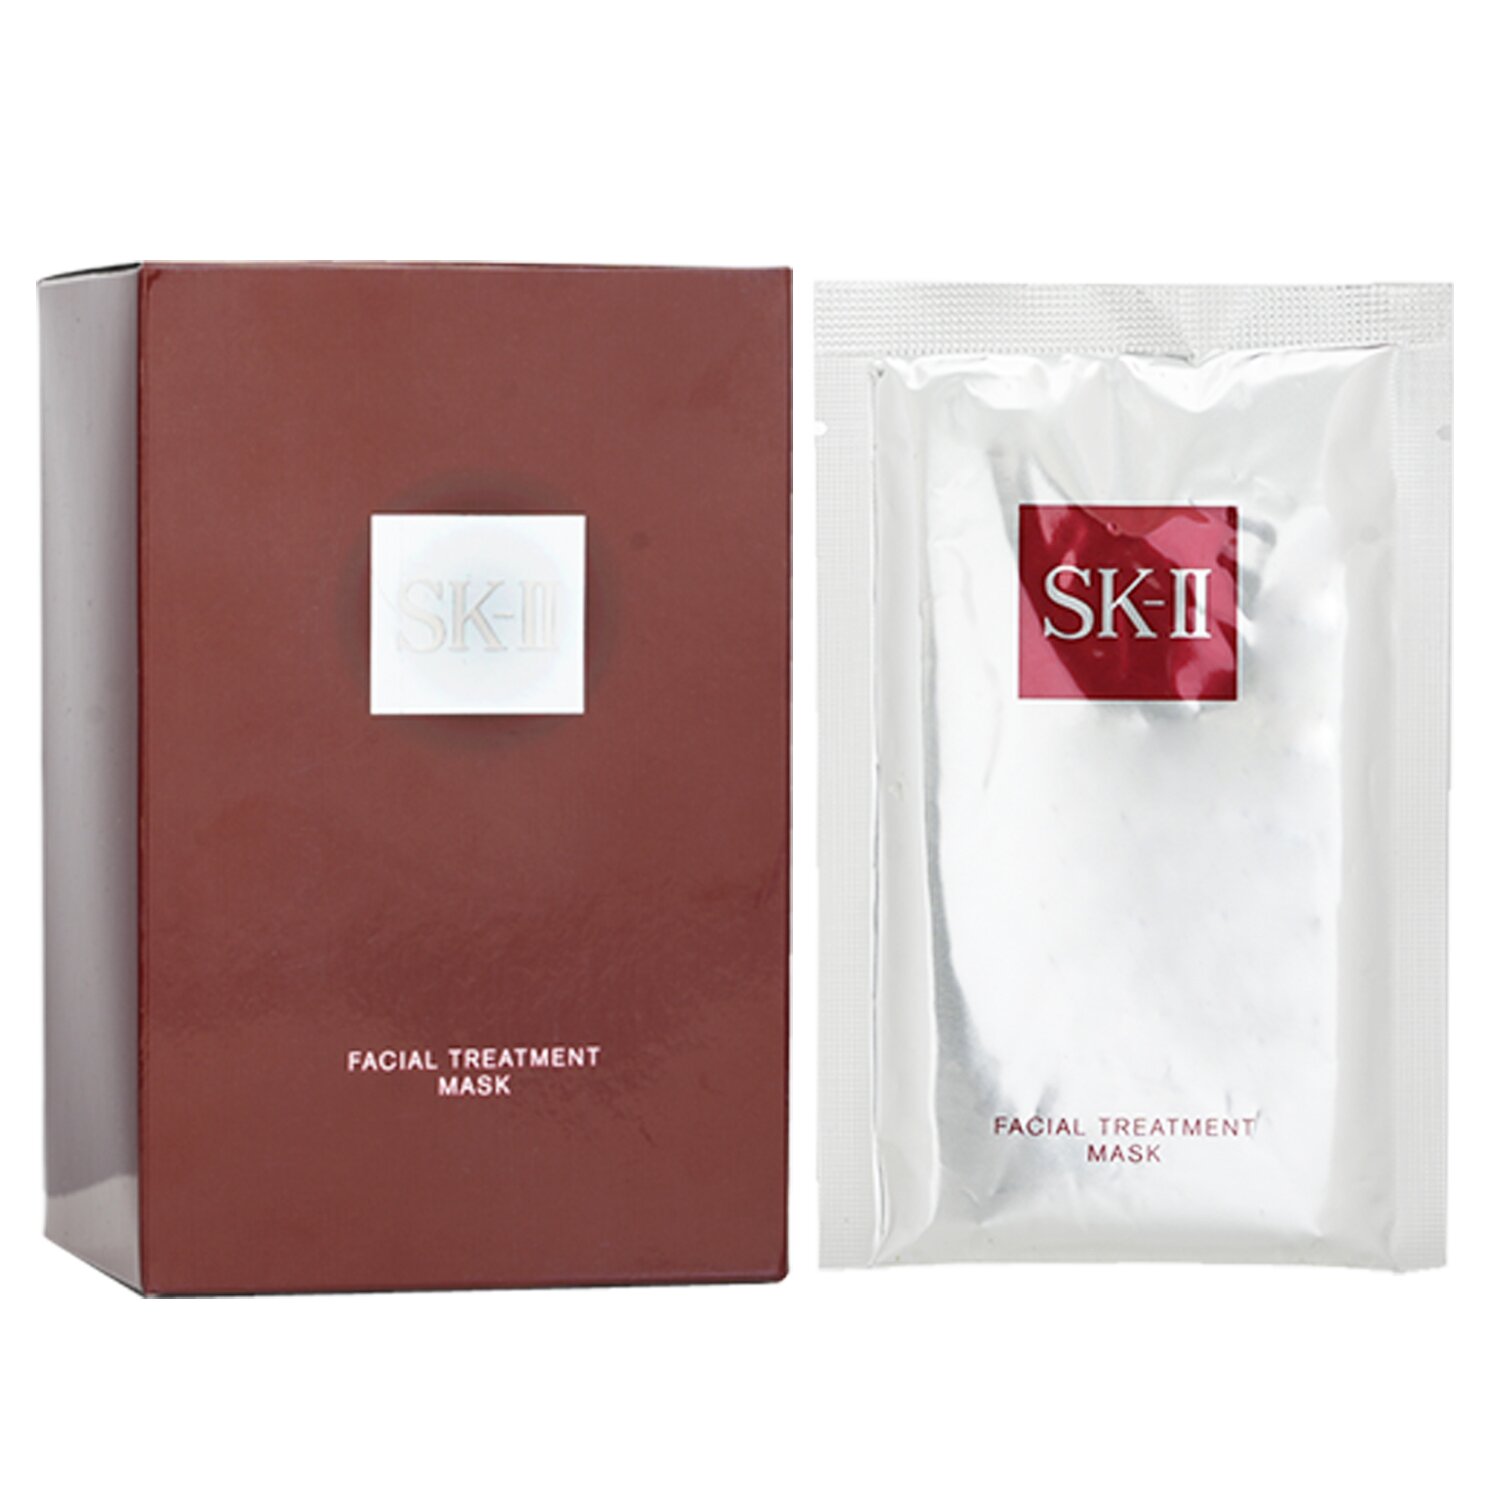 SK II Facial Treatment Mask (With box from Seasonal Set) 10sheets